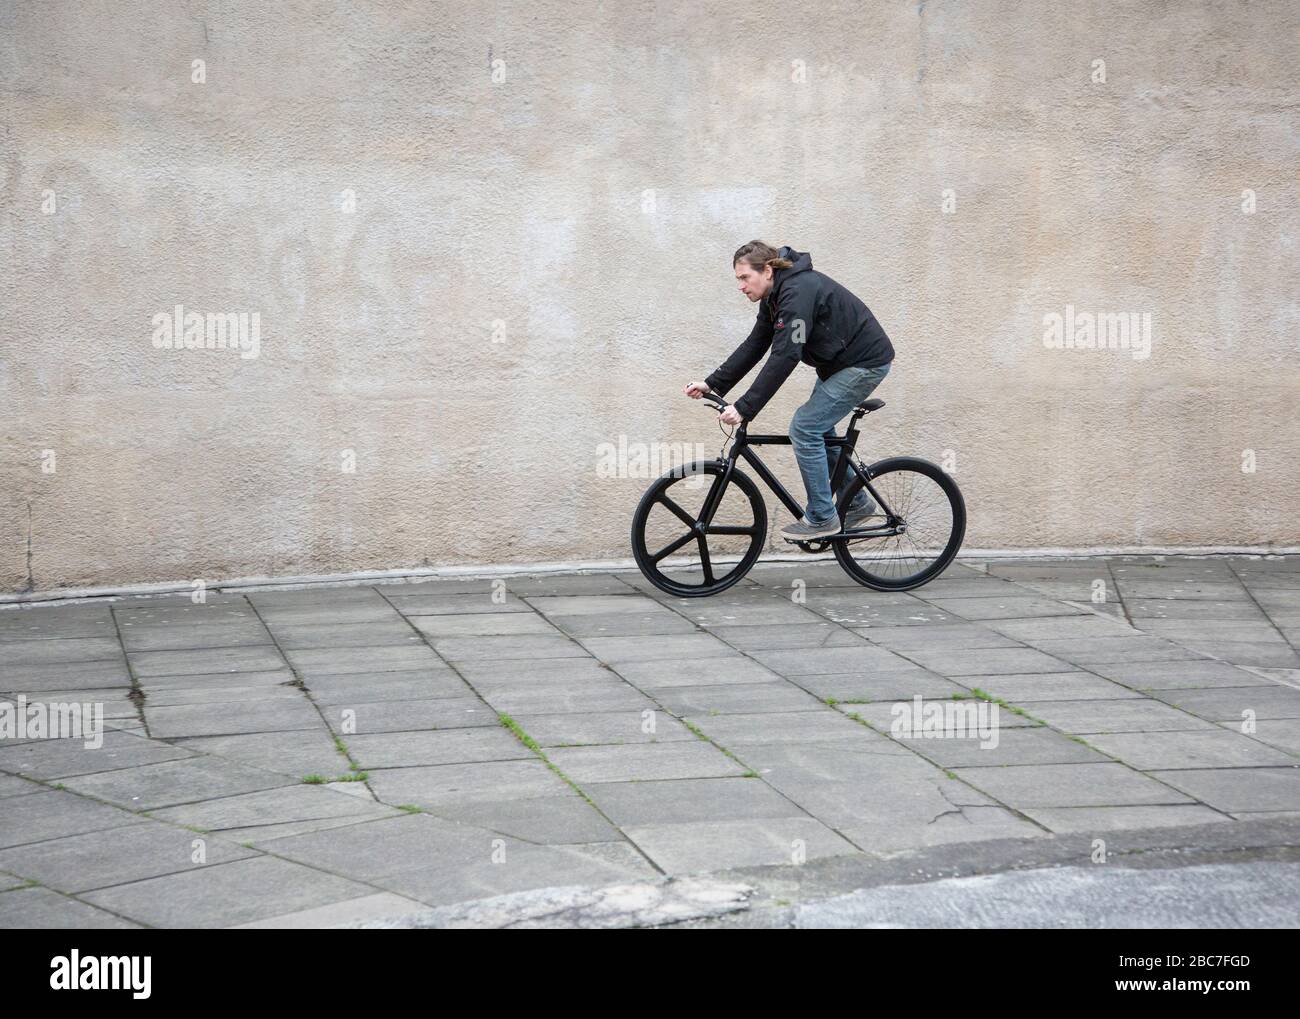 Man riding a single speed bike in an urban environment Stock Photo